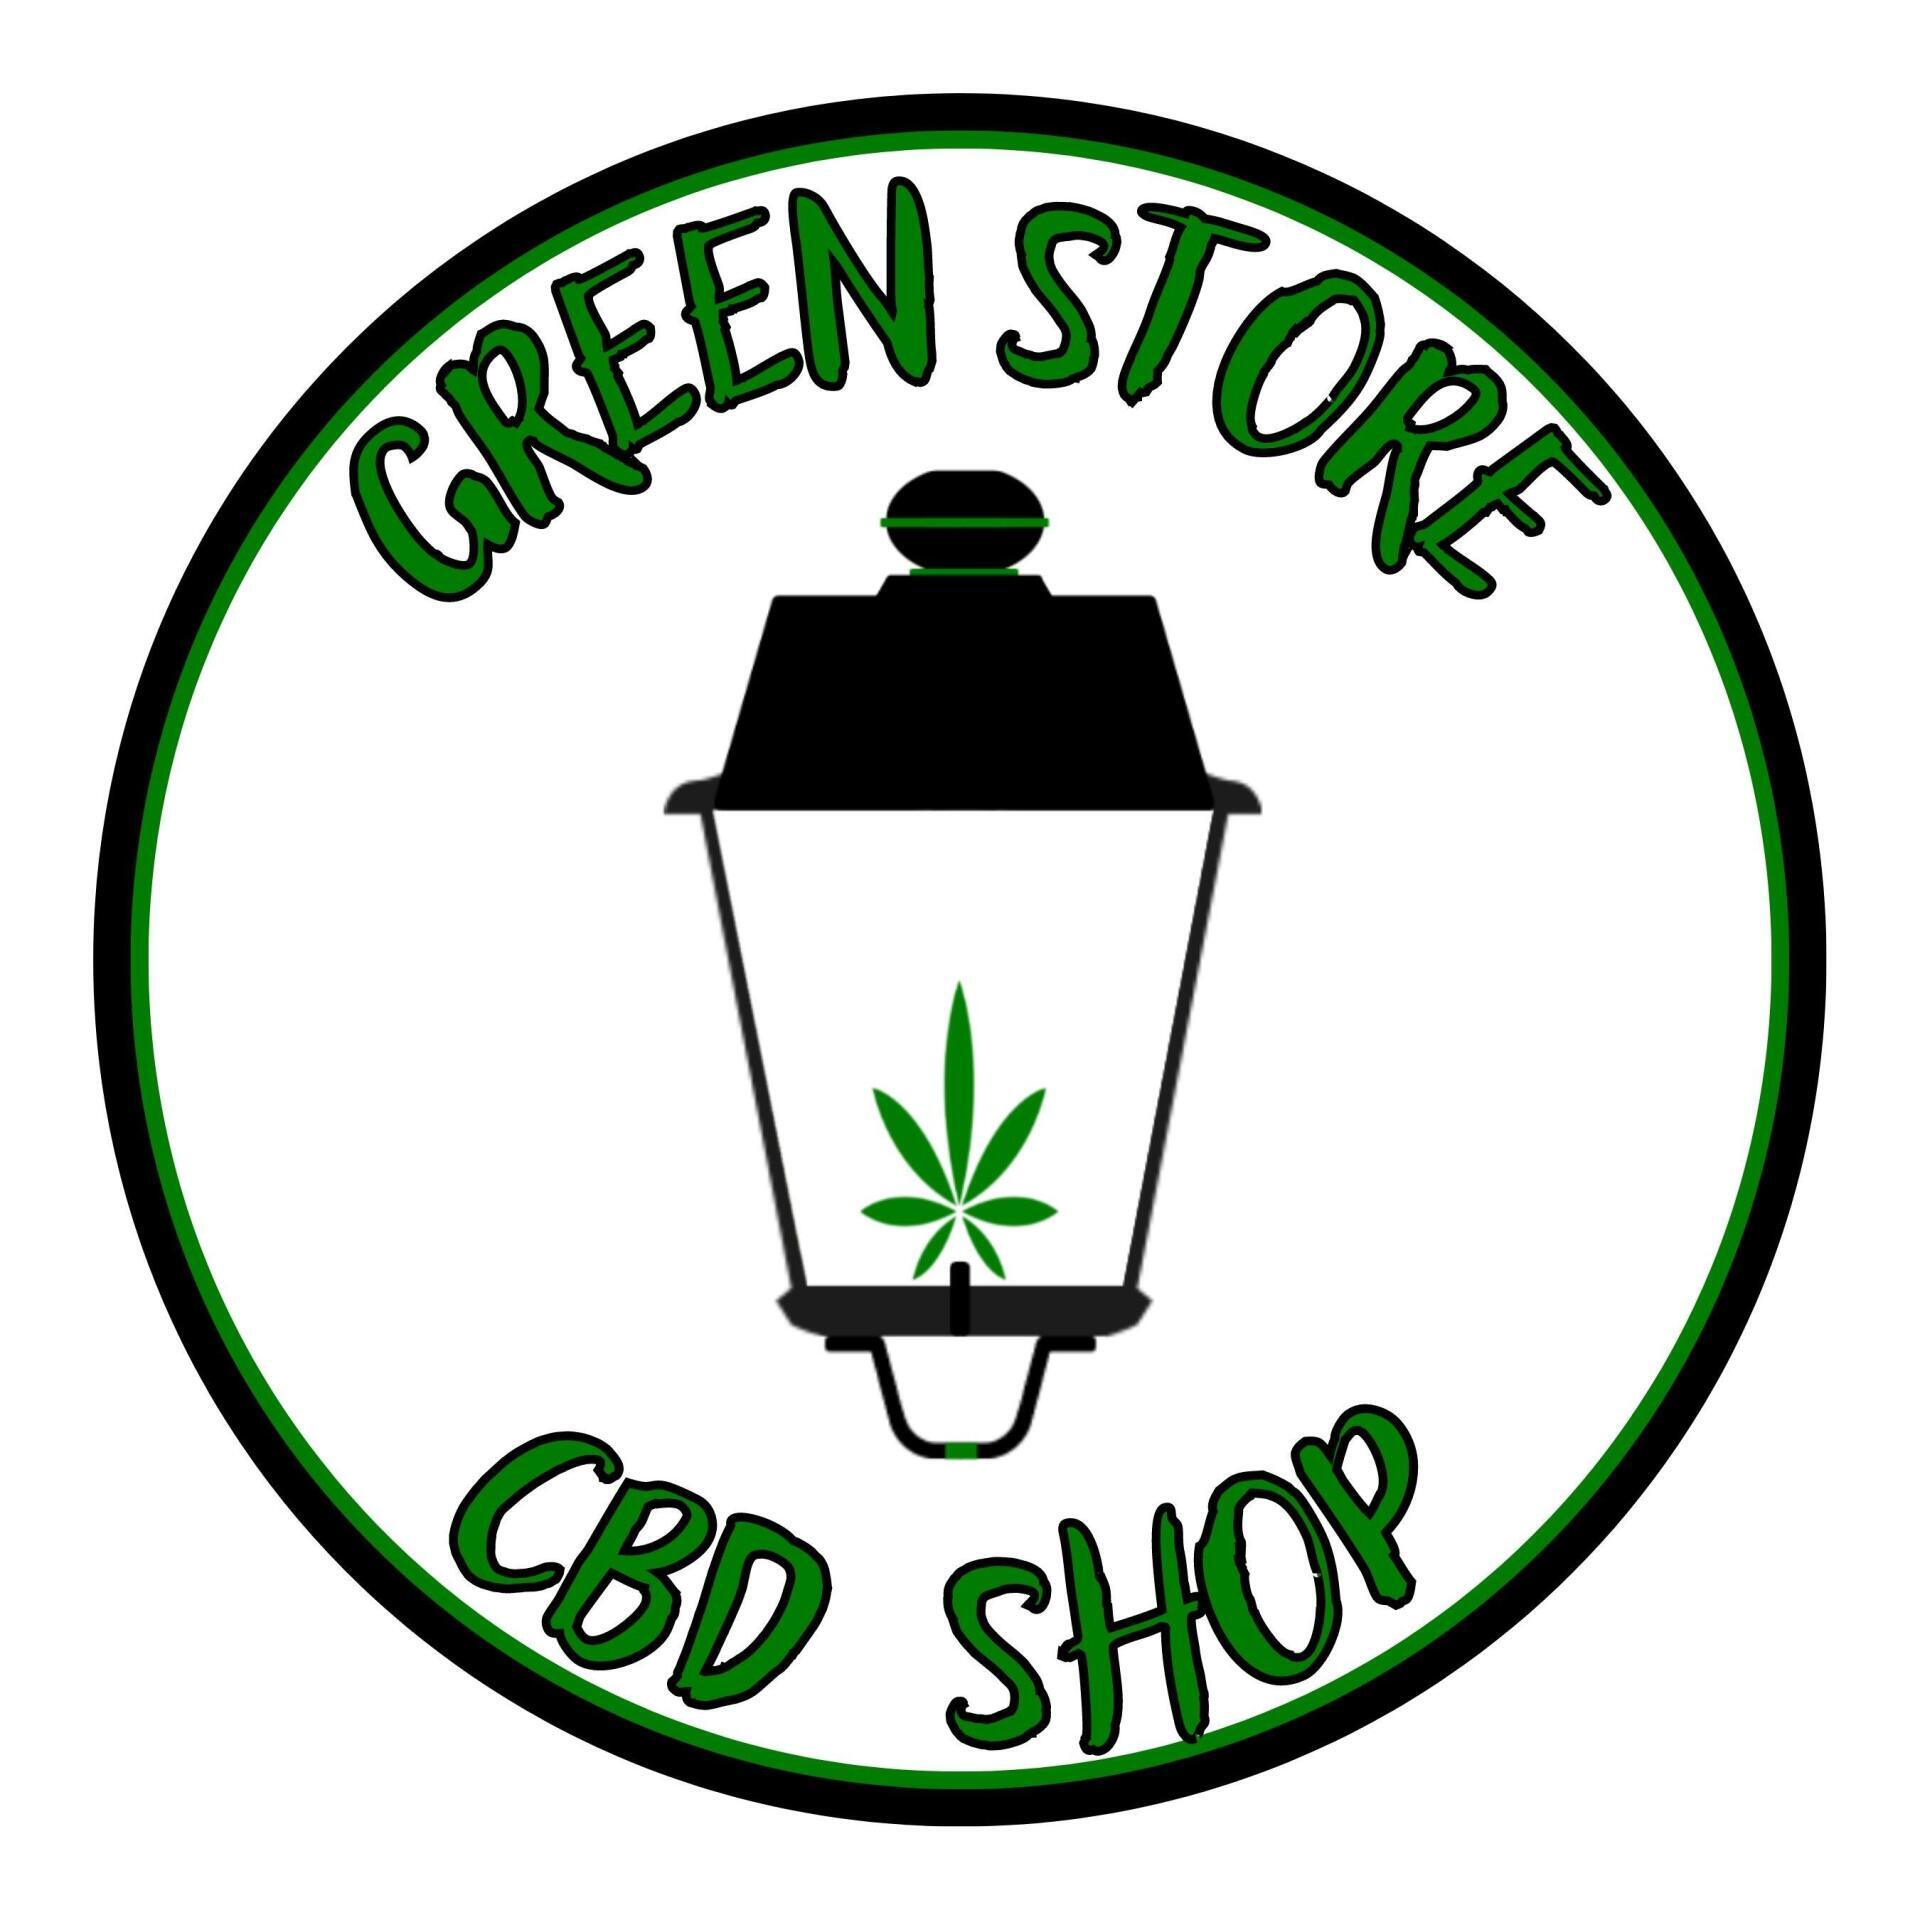 GREEN STORE SHOP logo